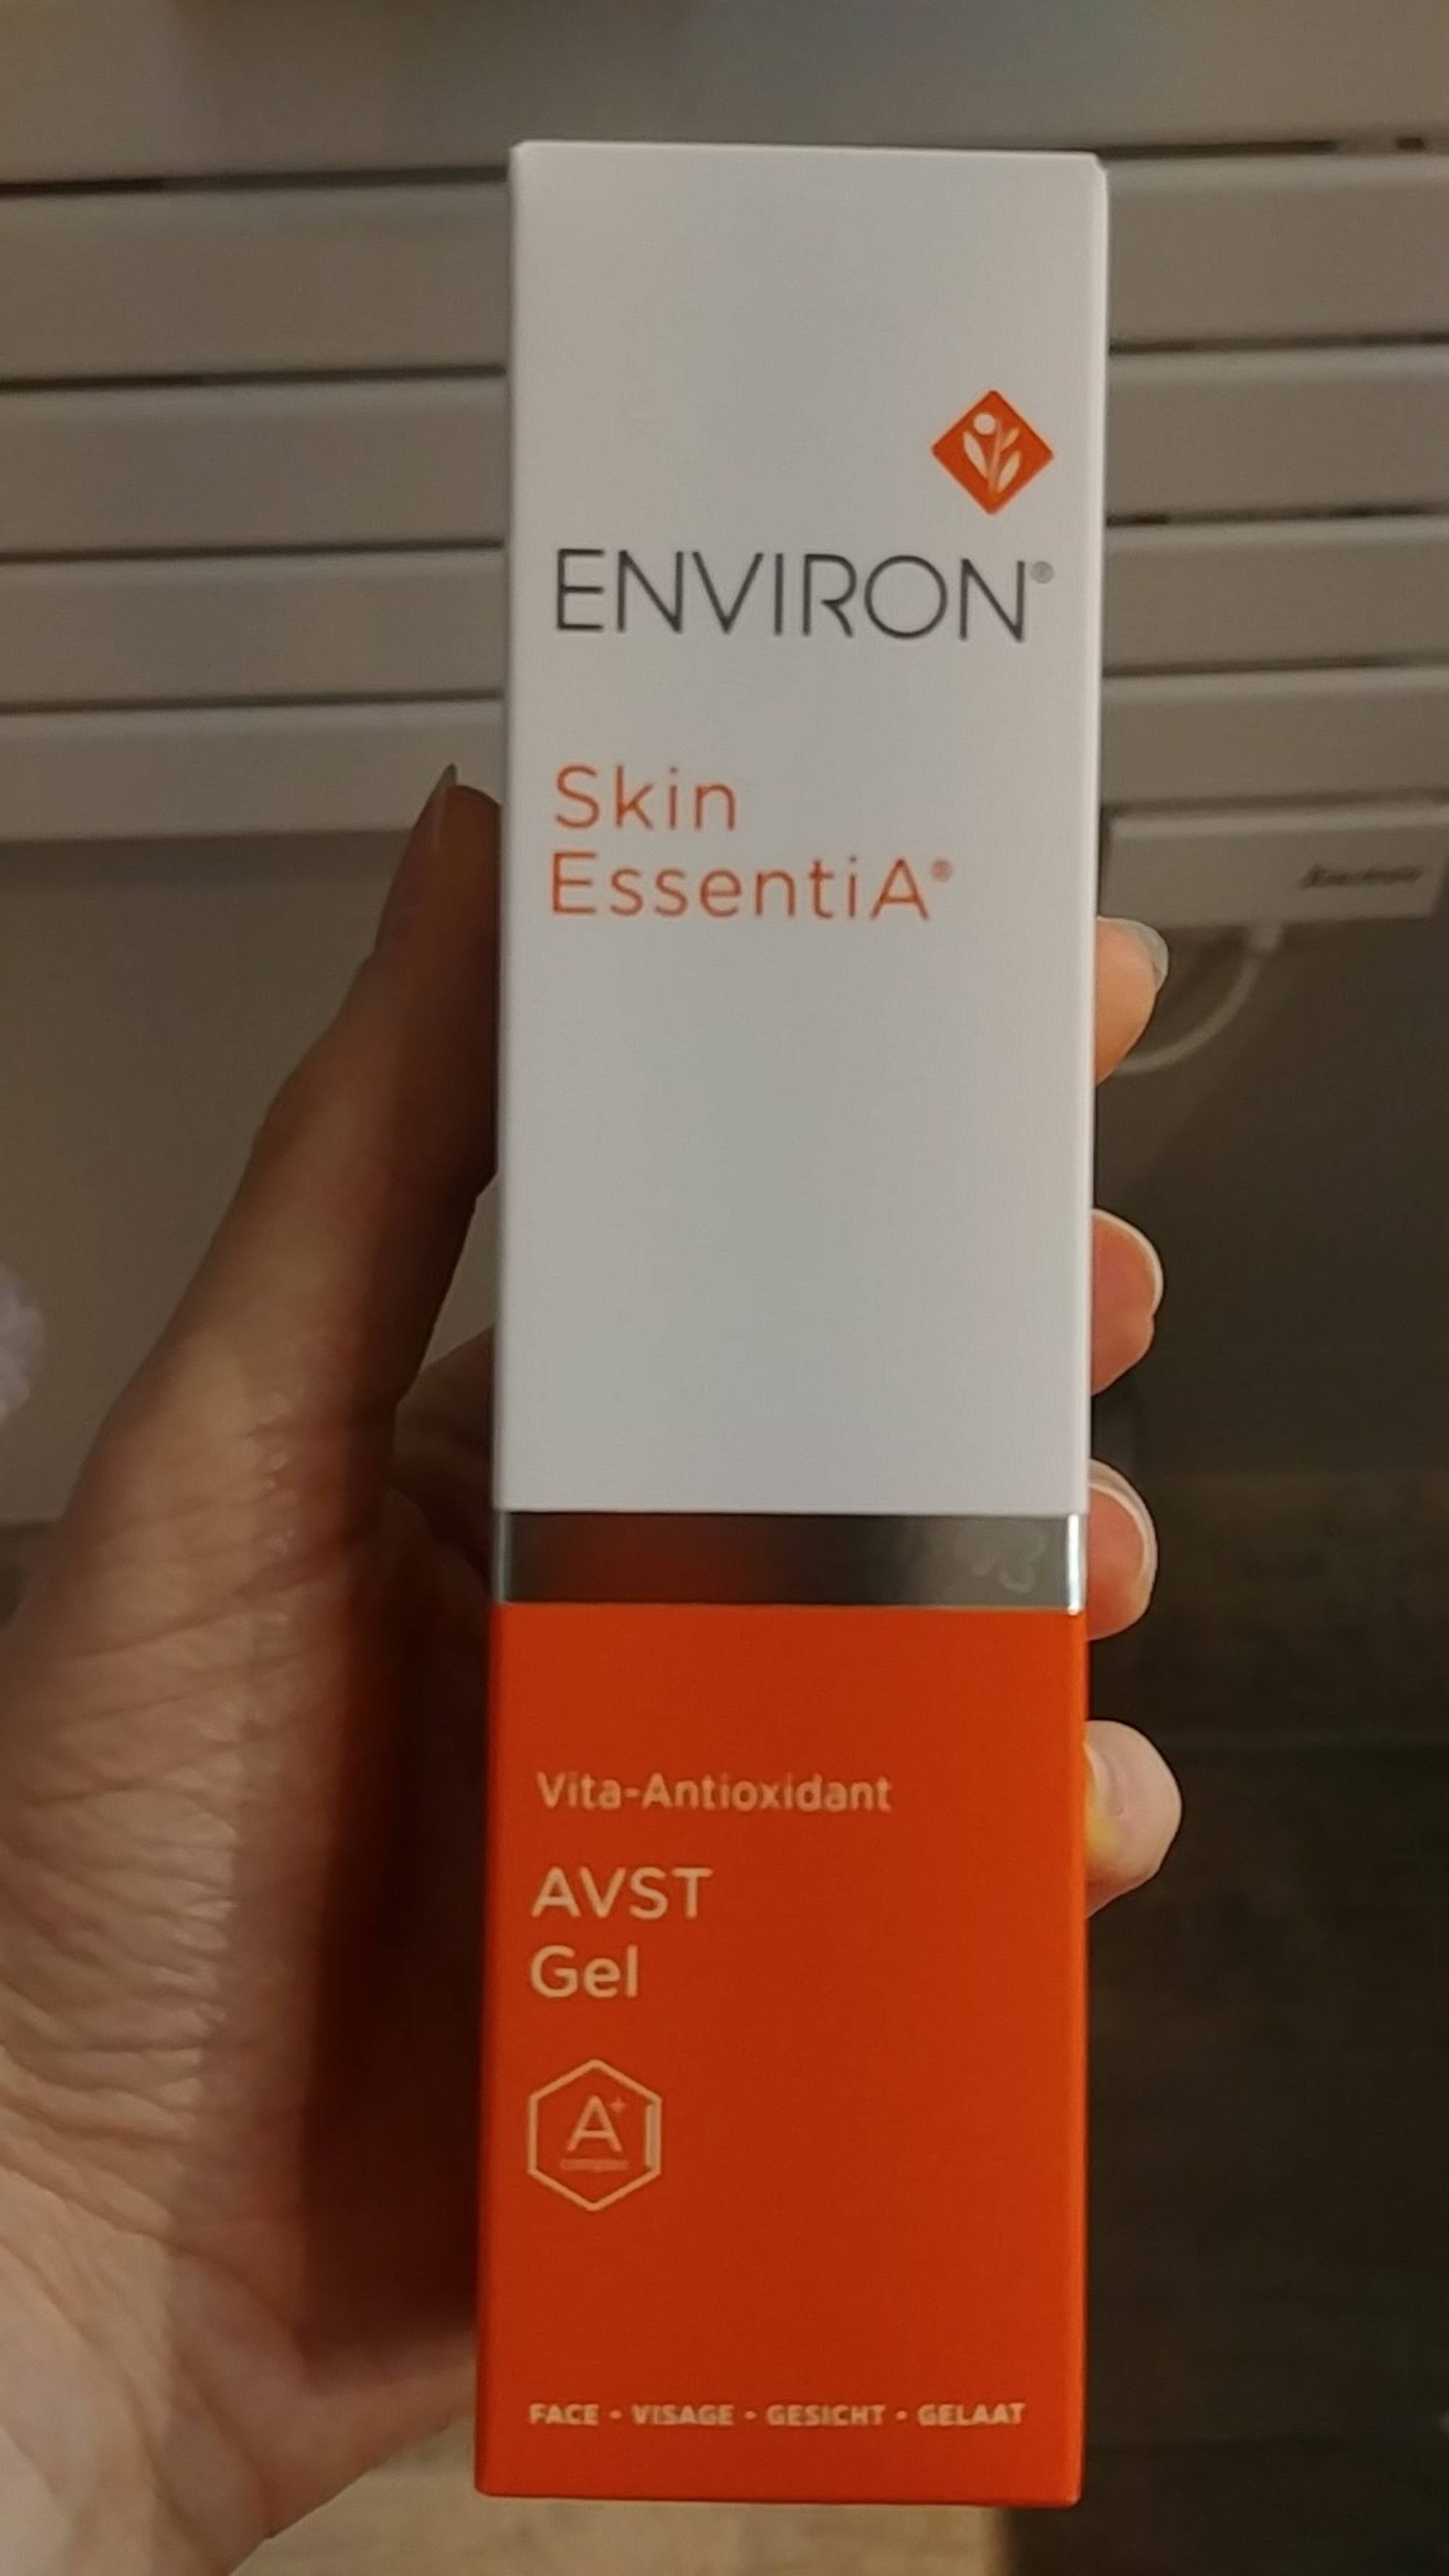 ENVIRON - Skin essentia - Vita-antioxidant AVST gel